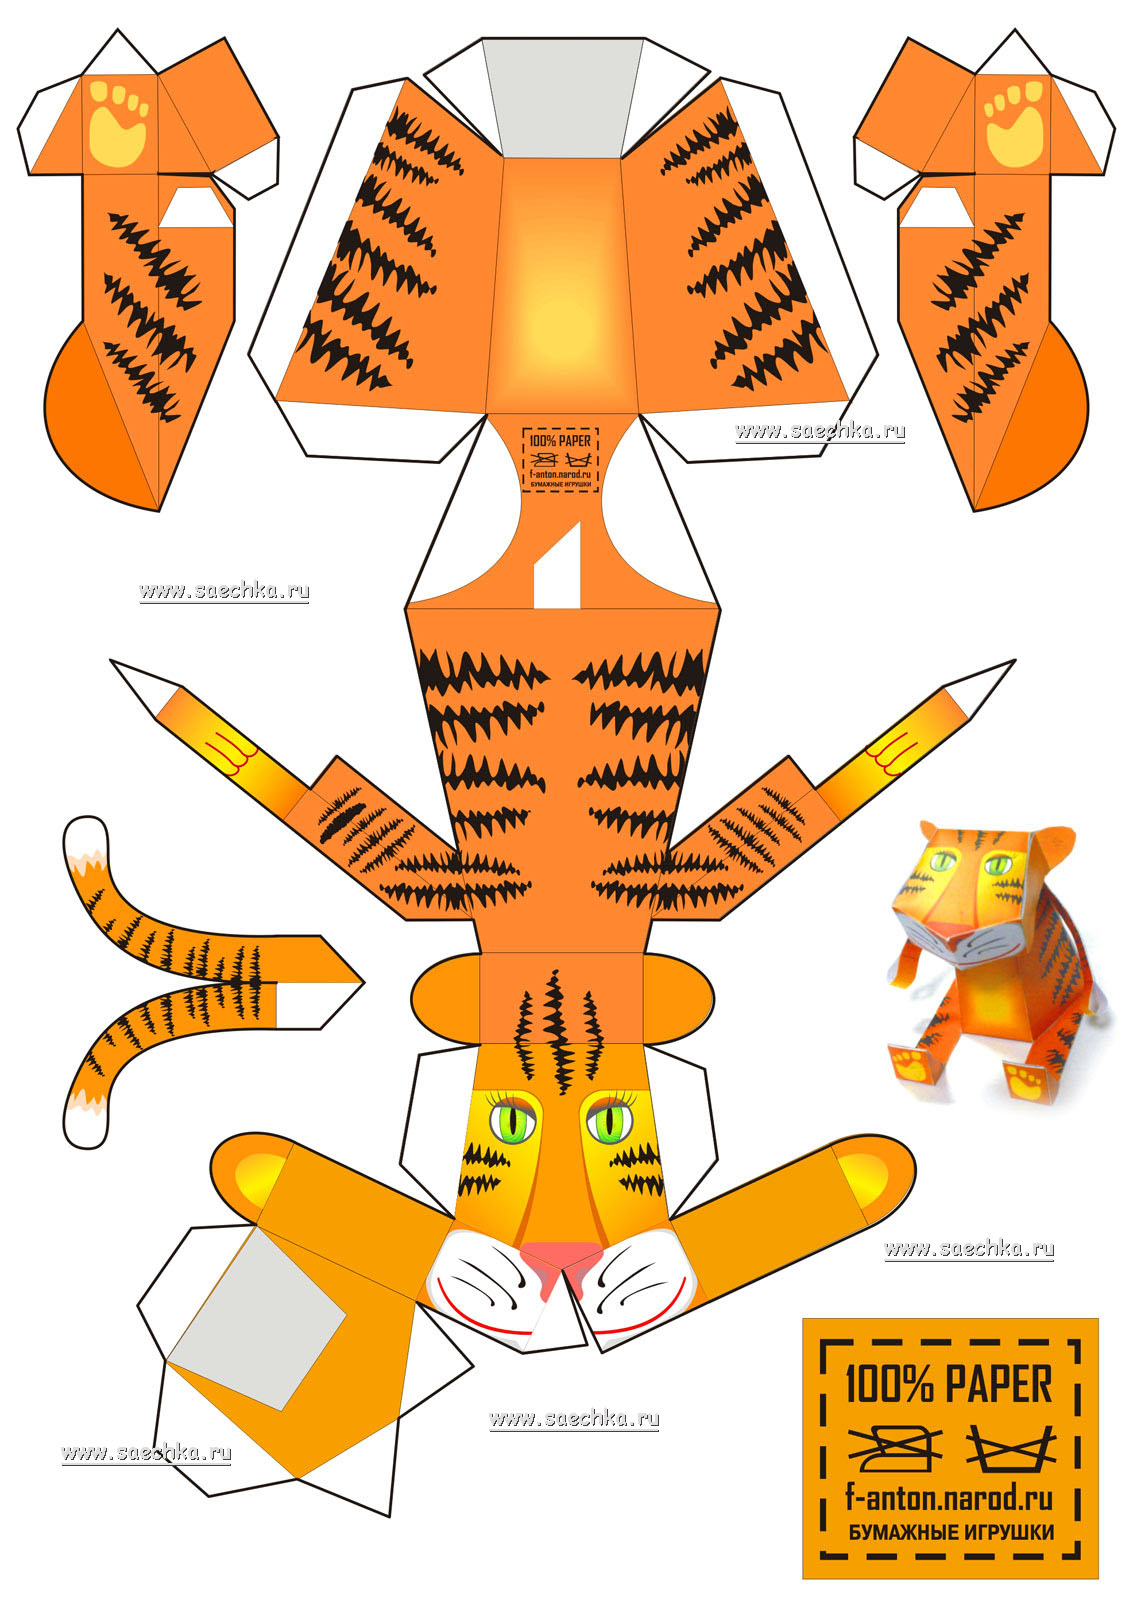 Тигр - символ года, паперкрафт papercraft